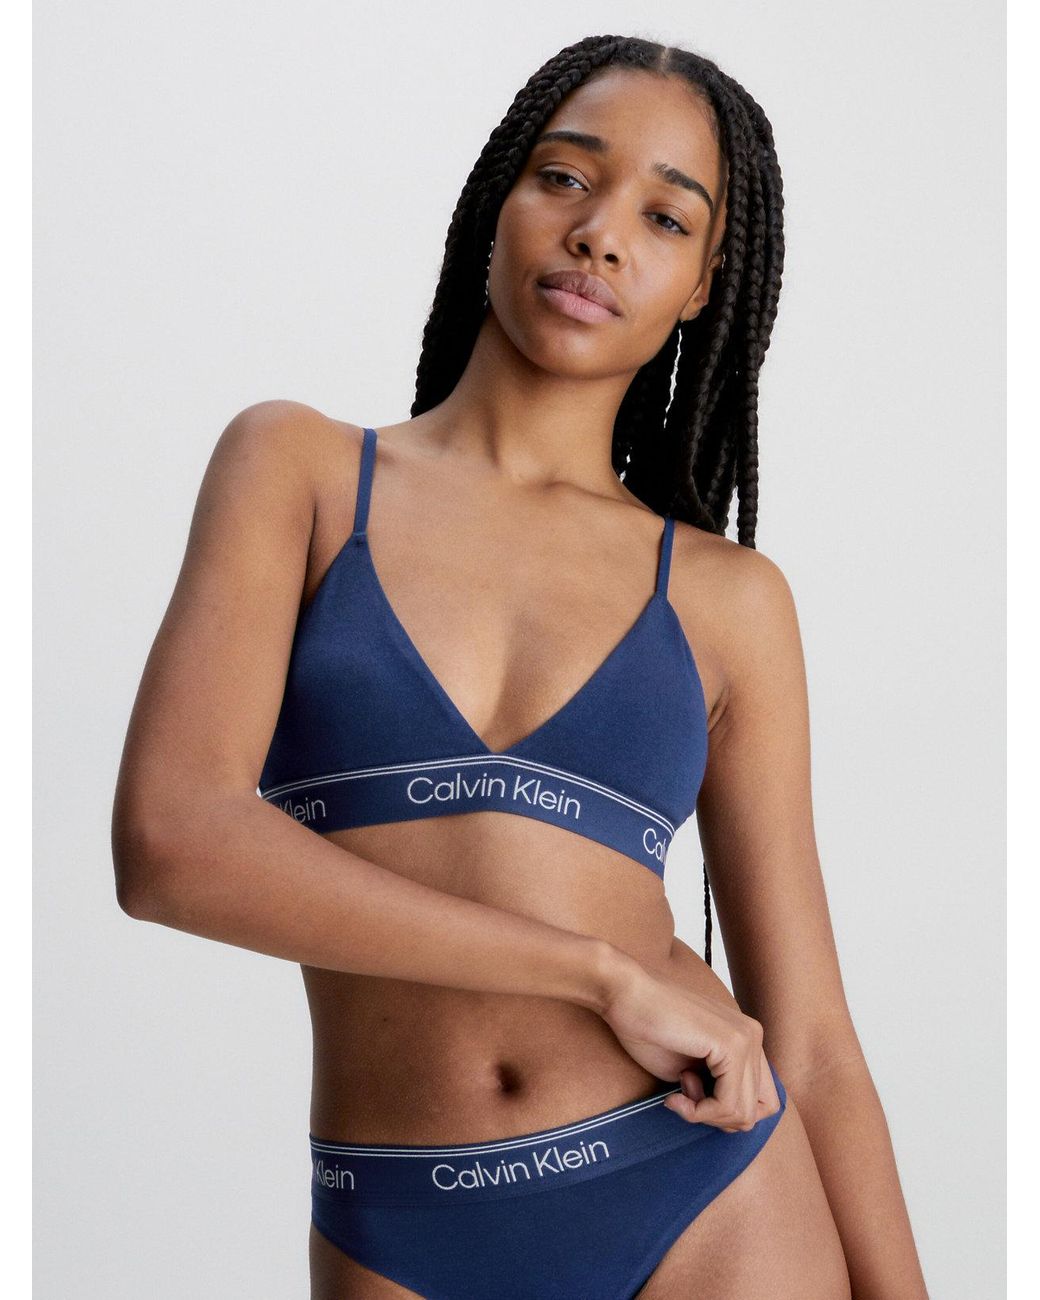 Calvin Klein Triangle Bra - Athletic Cotton in Blue